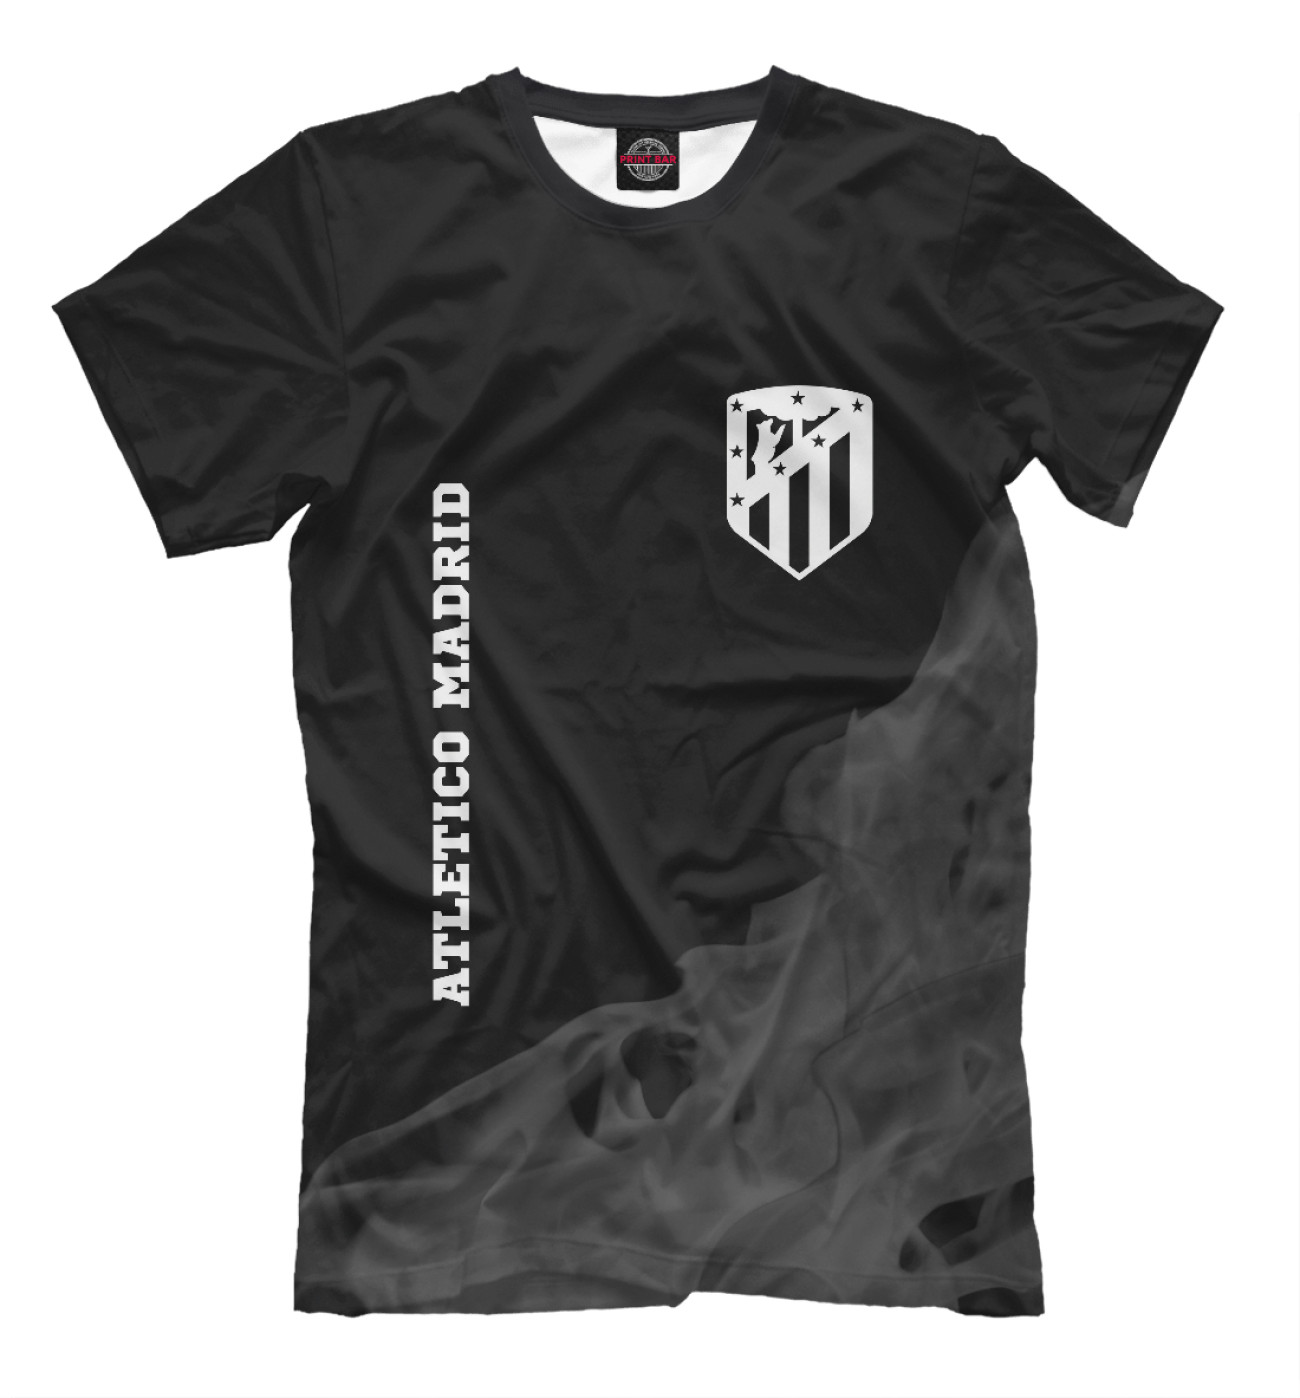 Мужская Футболка Atletico Madrid Sport Black, артикул: ATL-518015-fut-2